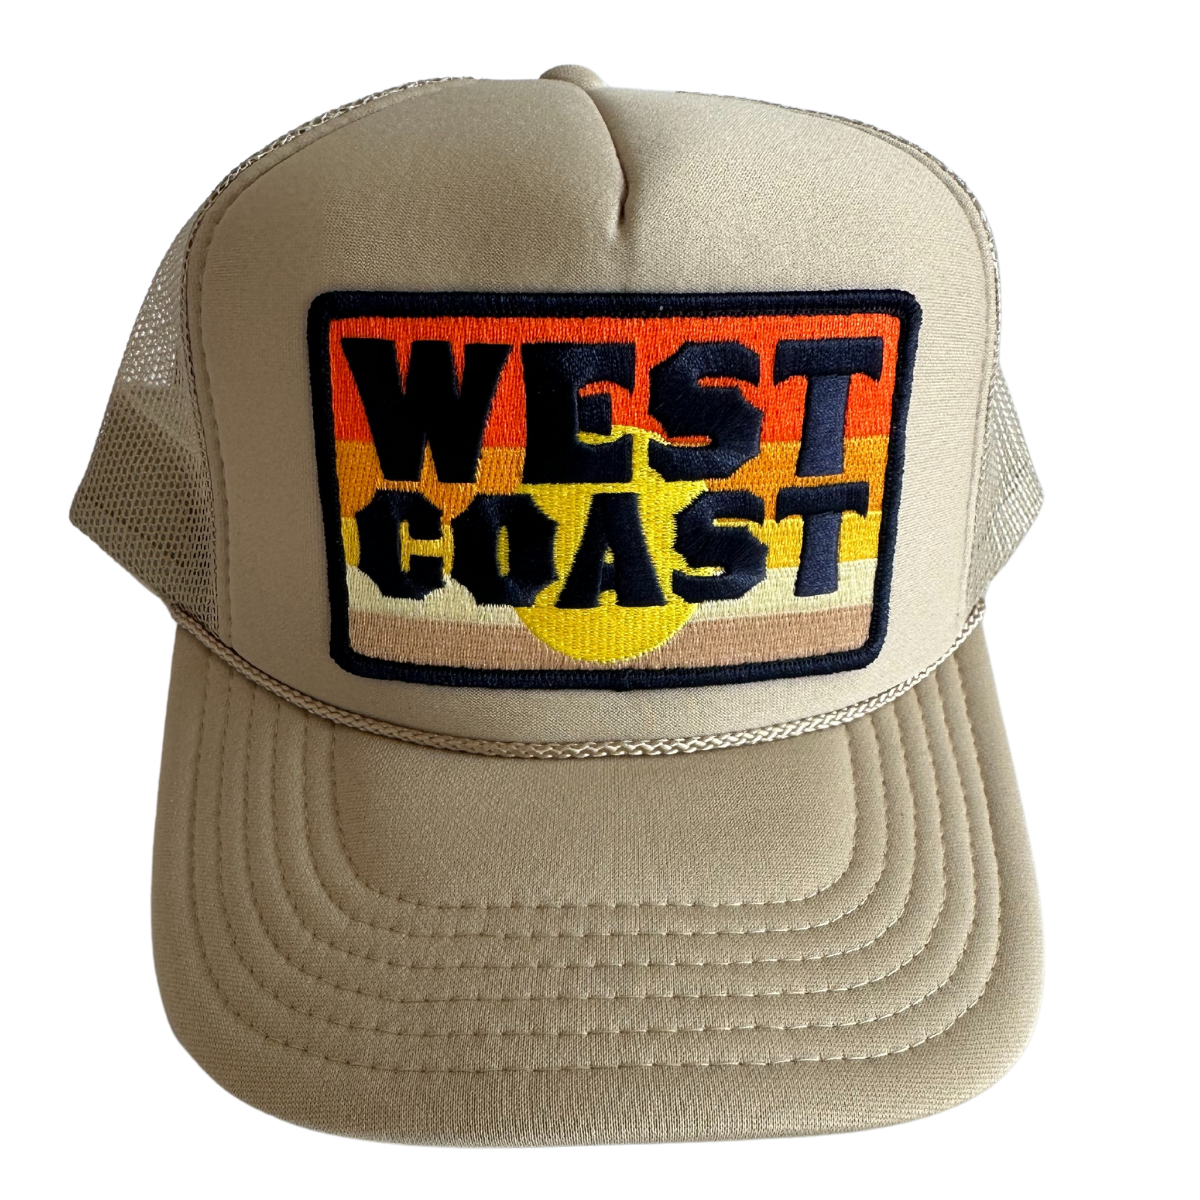 West Coast Patch Trucker Hat